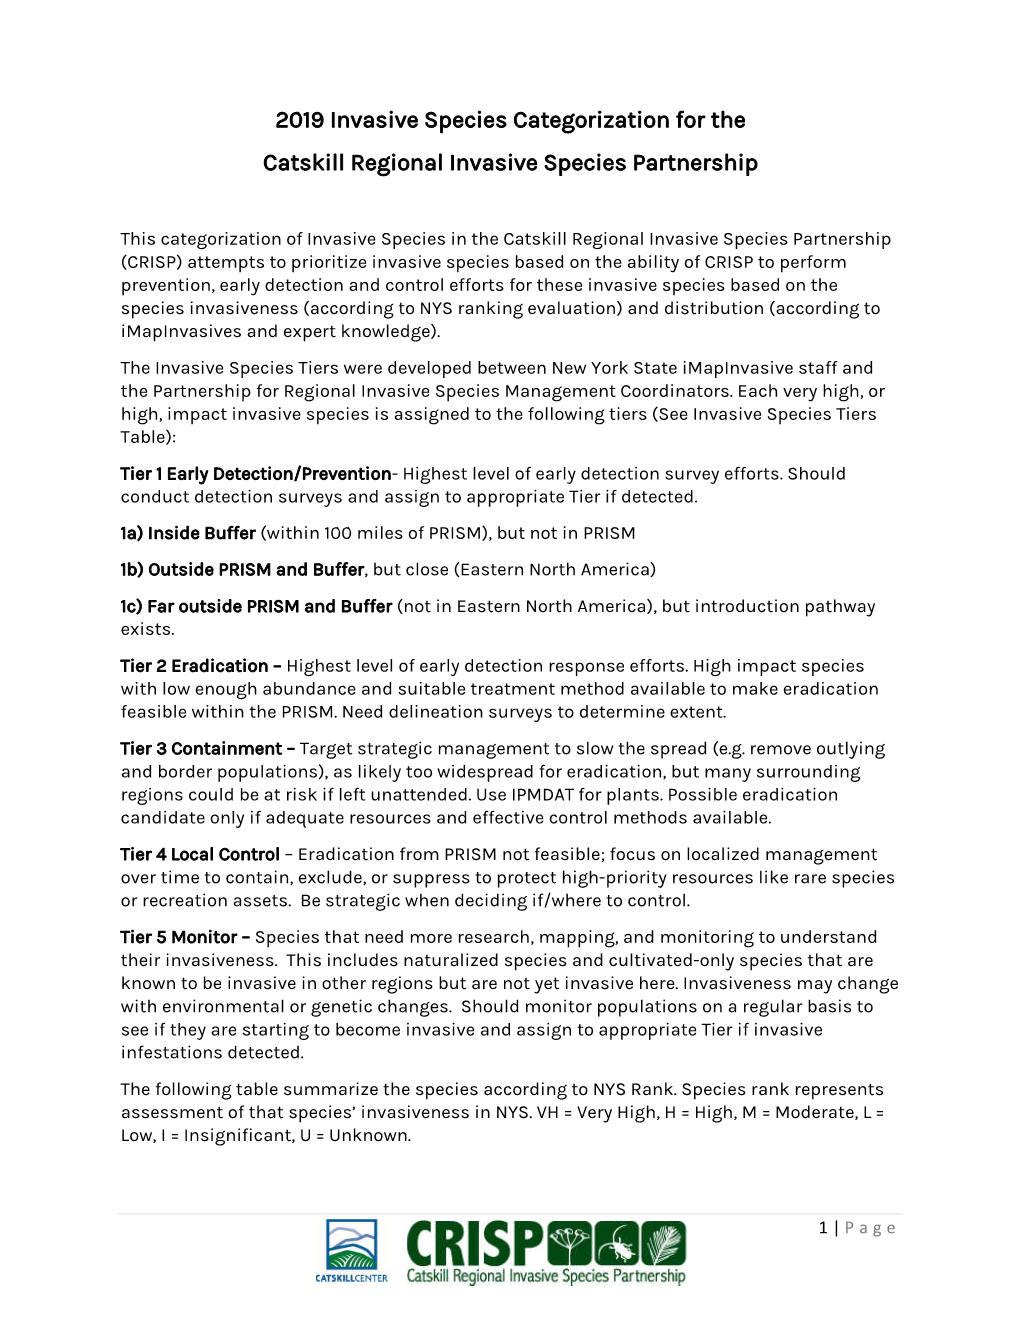 2019 Invasive Species Categorization for the Catskill Regional Invasive Species Partnership